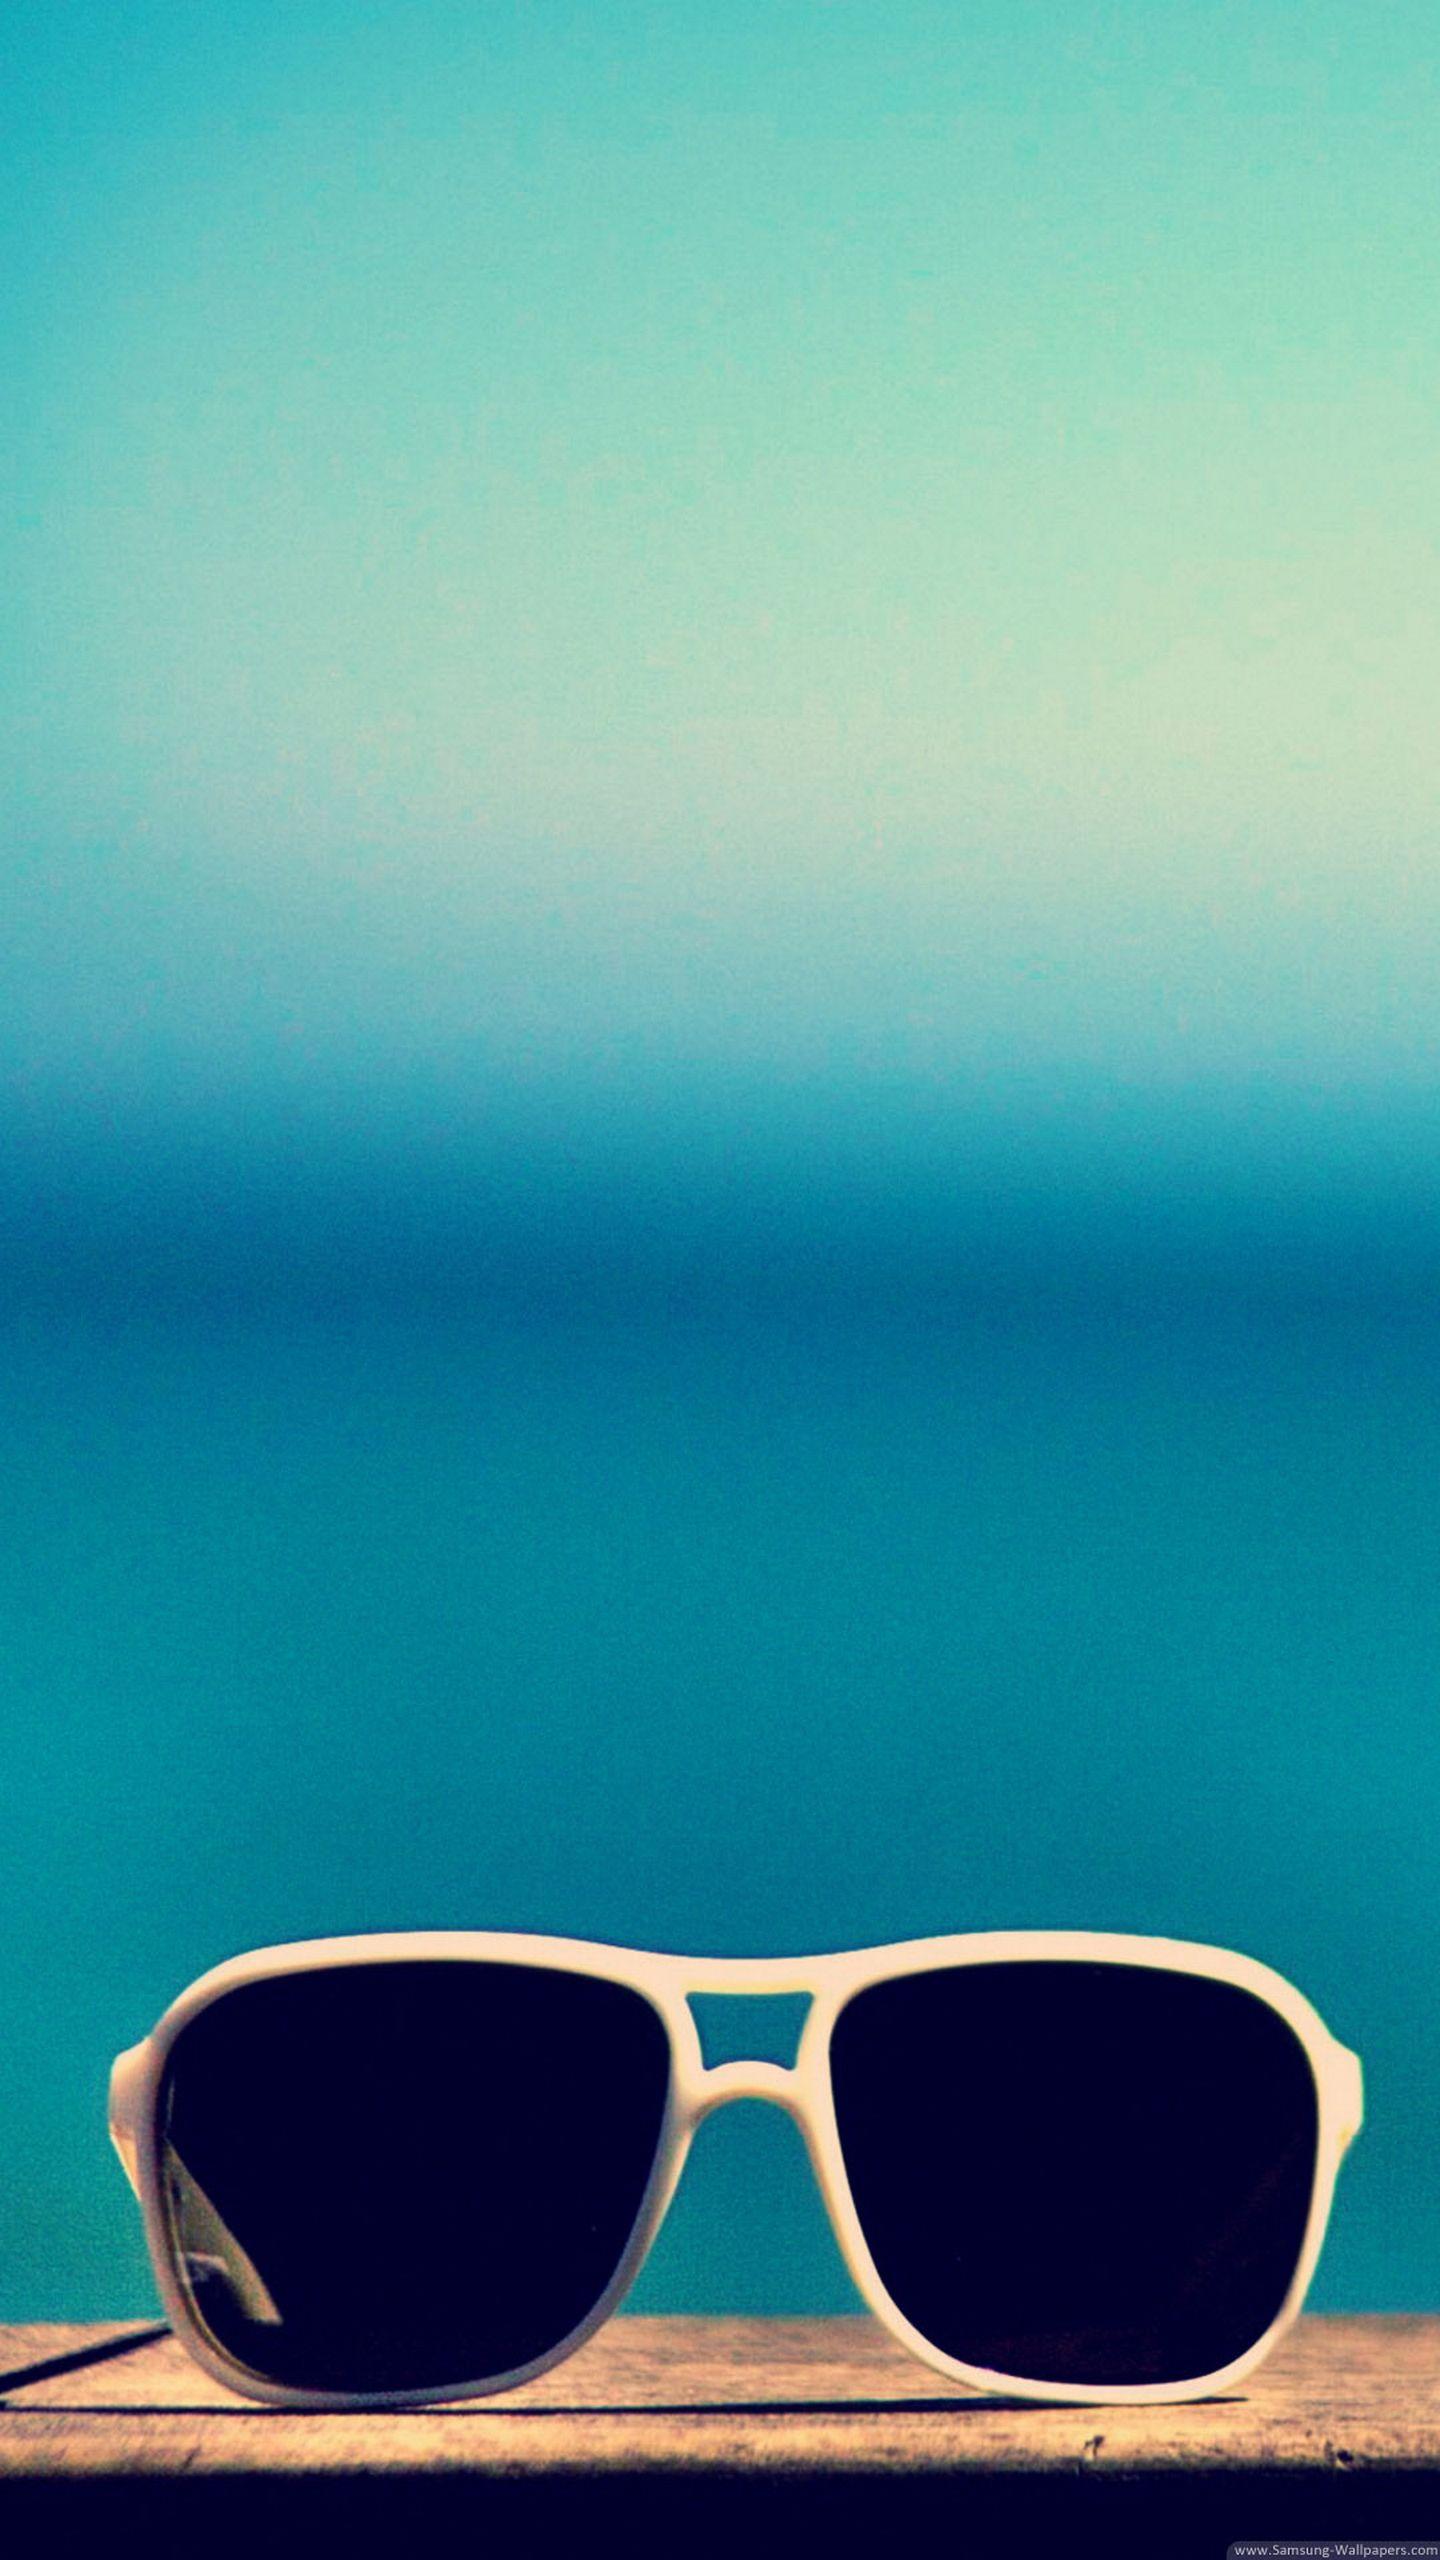 My Sunglasses Galaxy S6 Wallpaper (1440x2560)